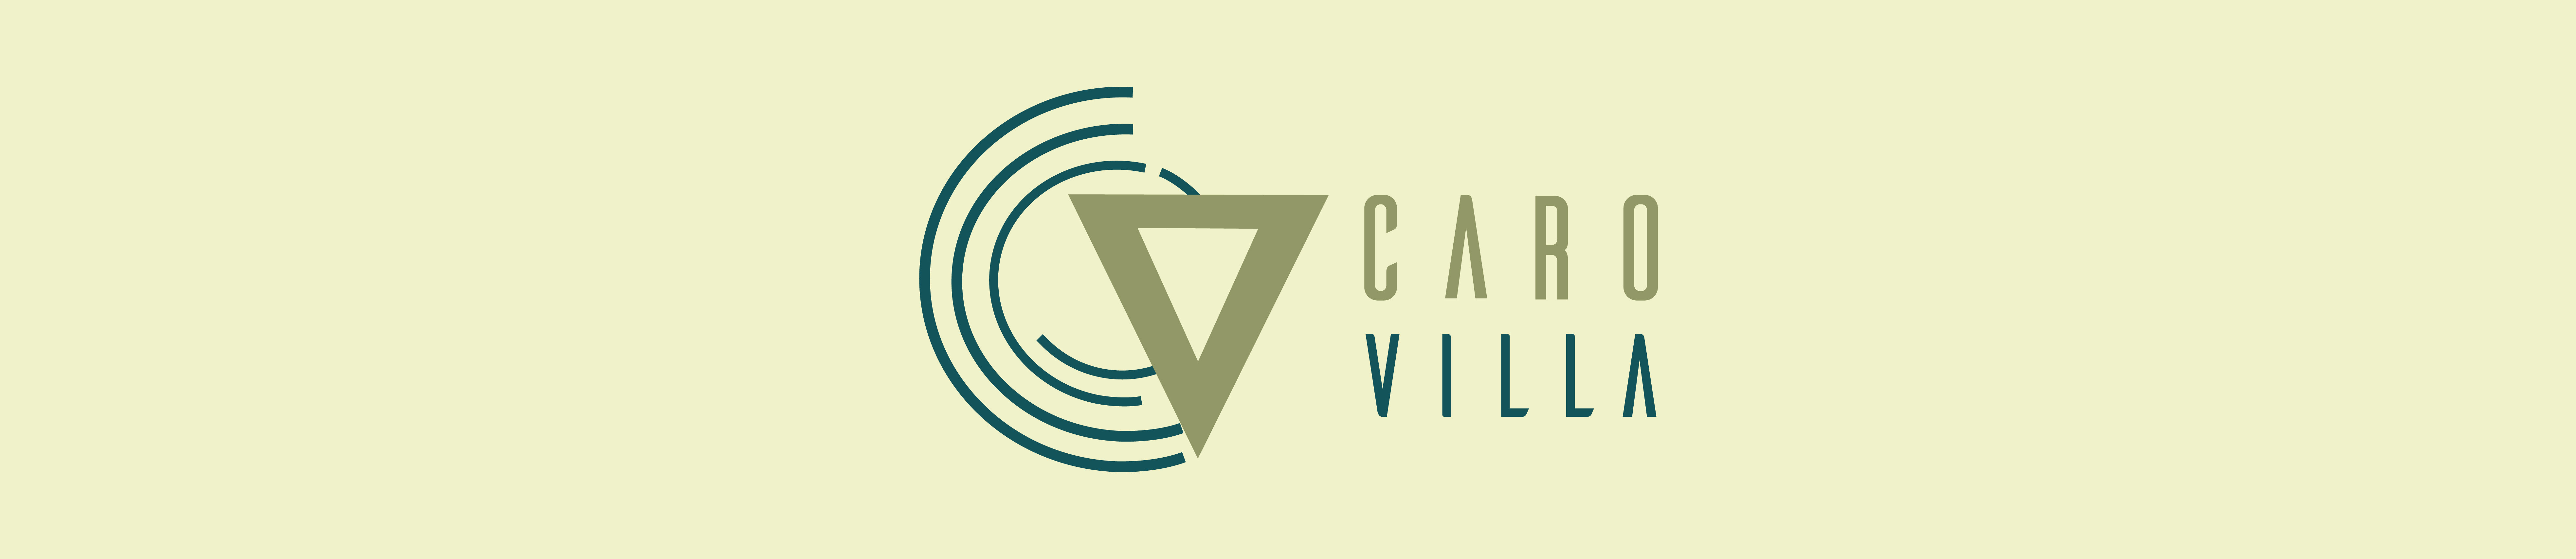 Carolina Villa Gómez's profile banner